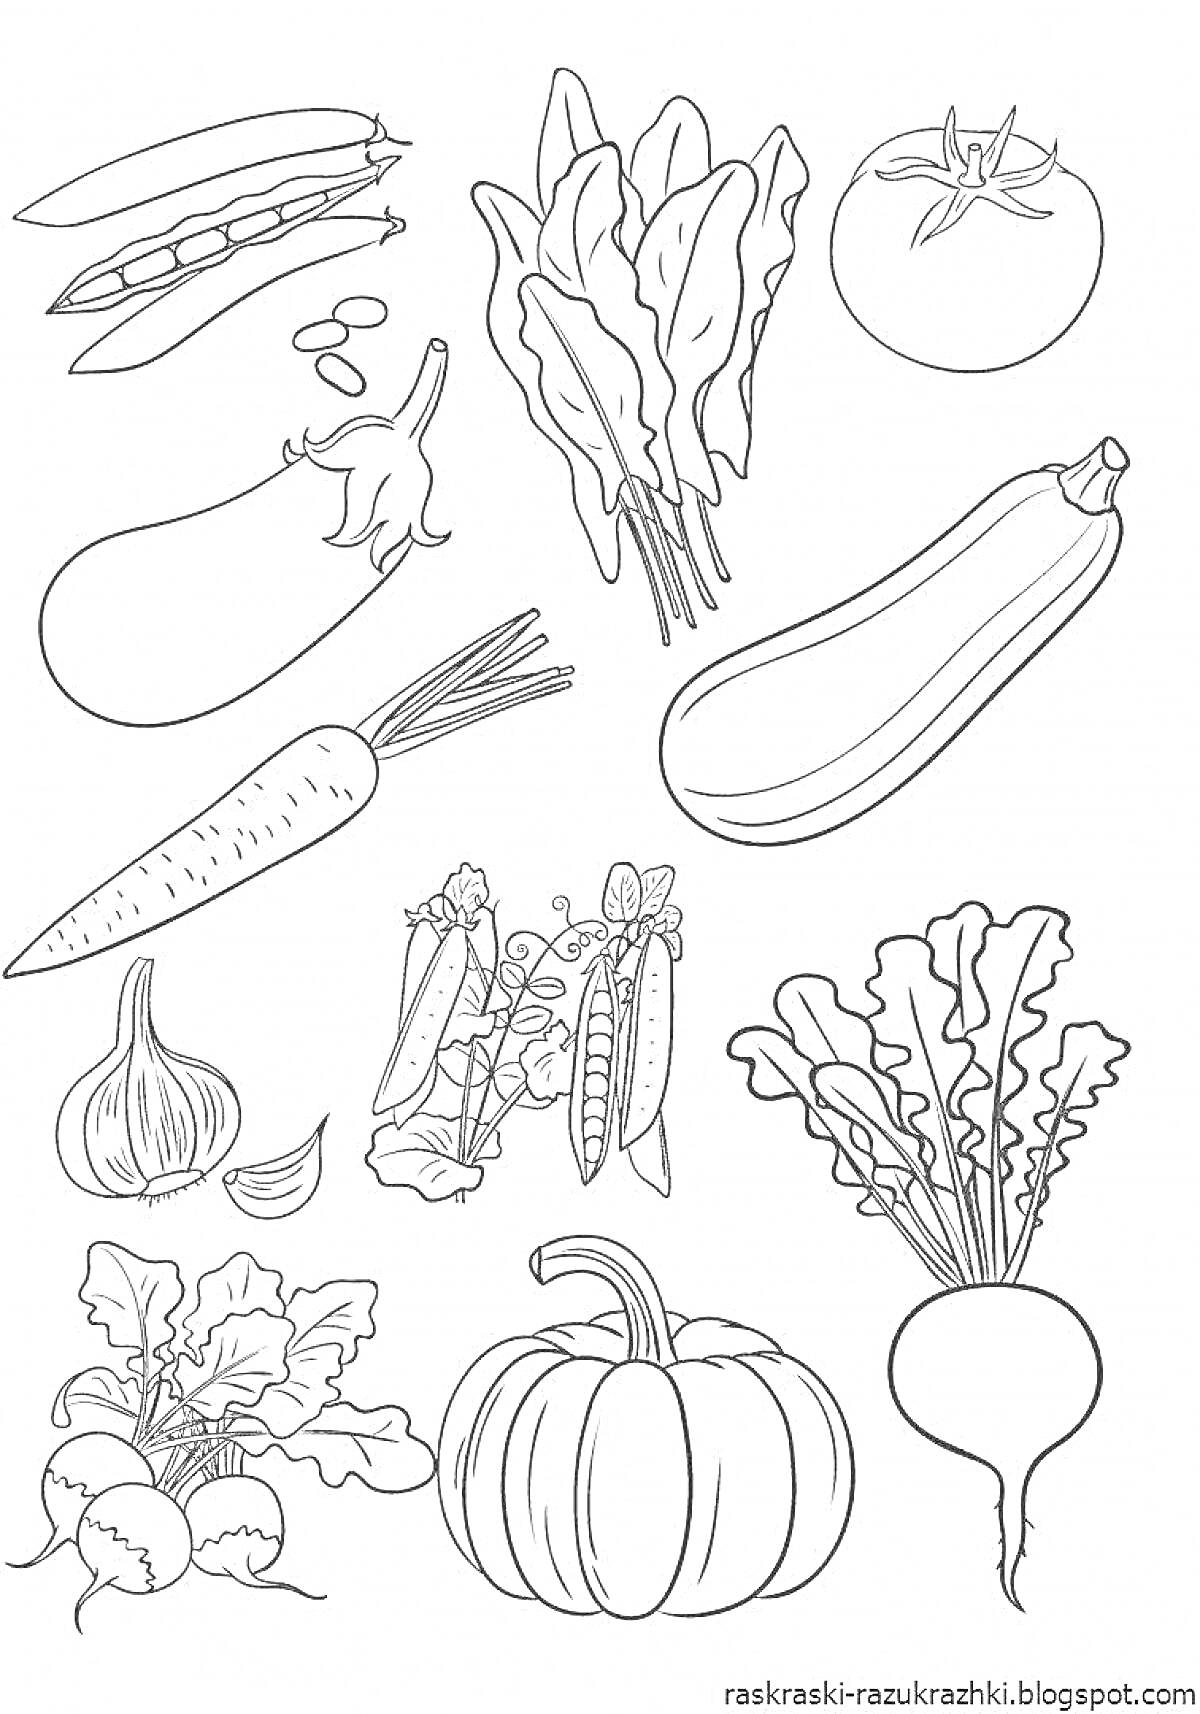 На раскраске изображено: Овощи, Баклажан, Морковь, Чеснок, Томат, Кукуруза, Тыква, Свекла